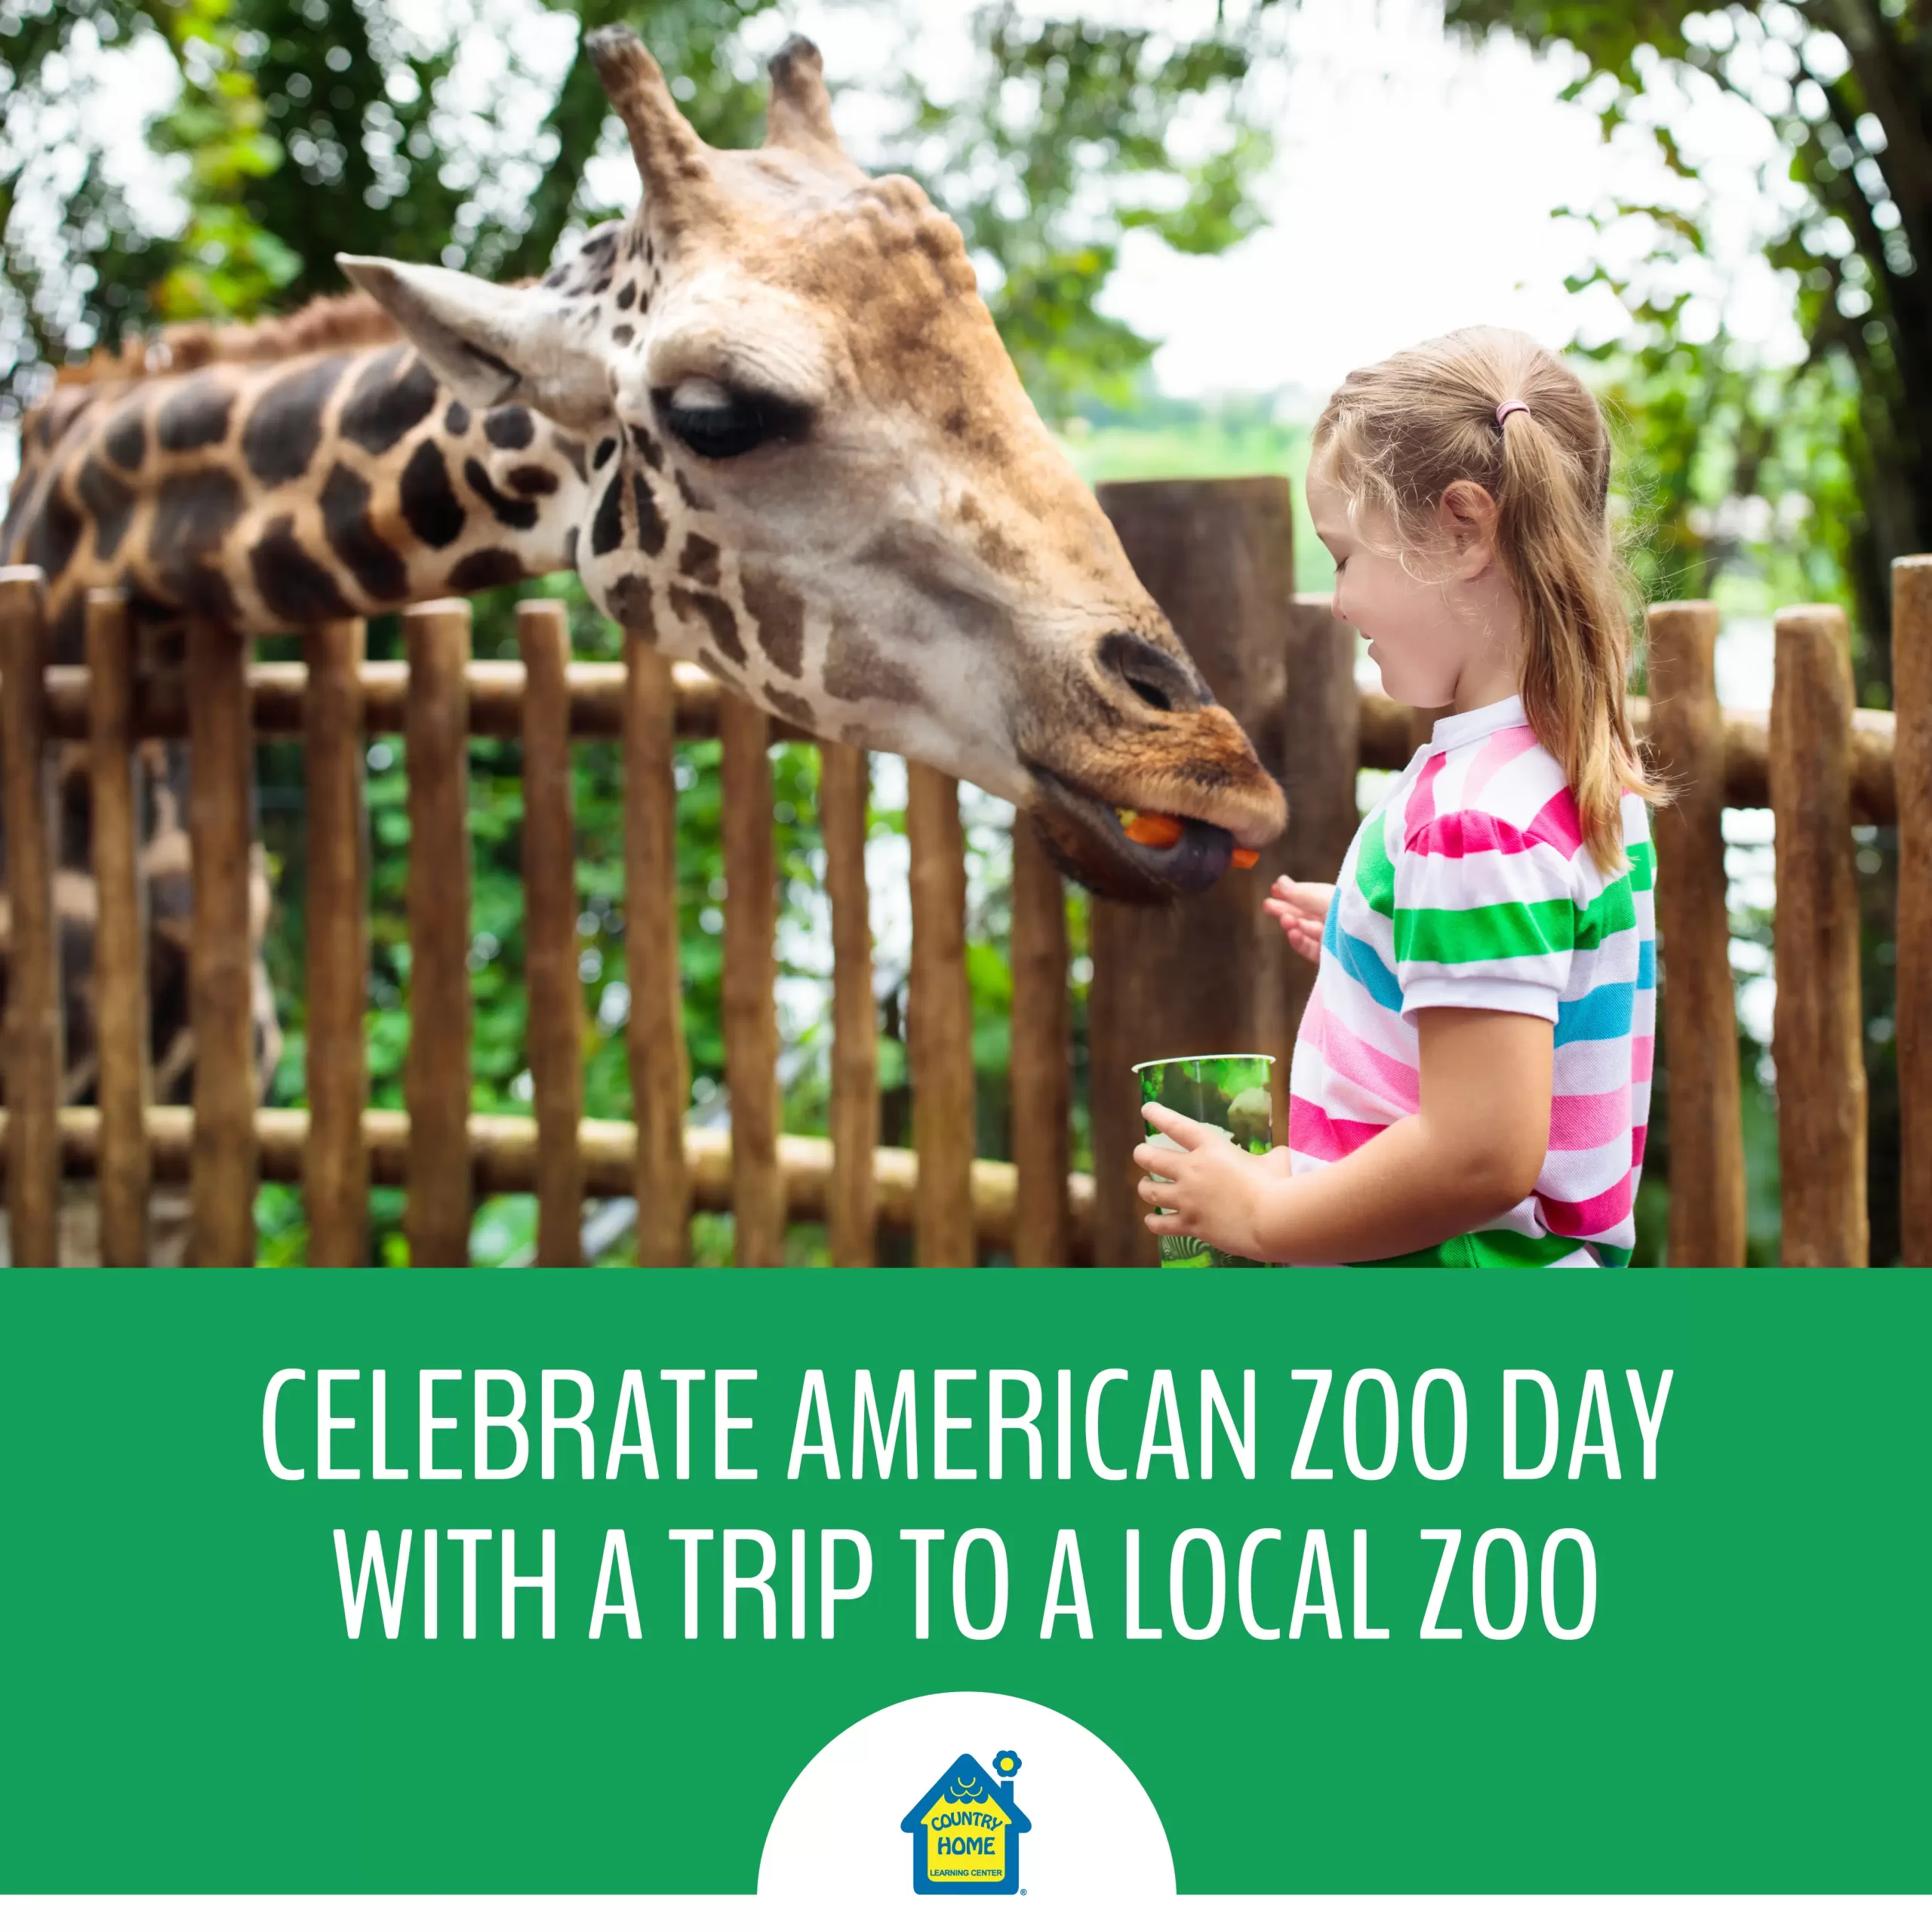 young girl feeding a giraffe at the zoo